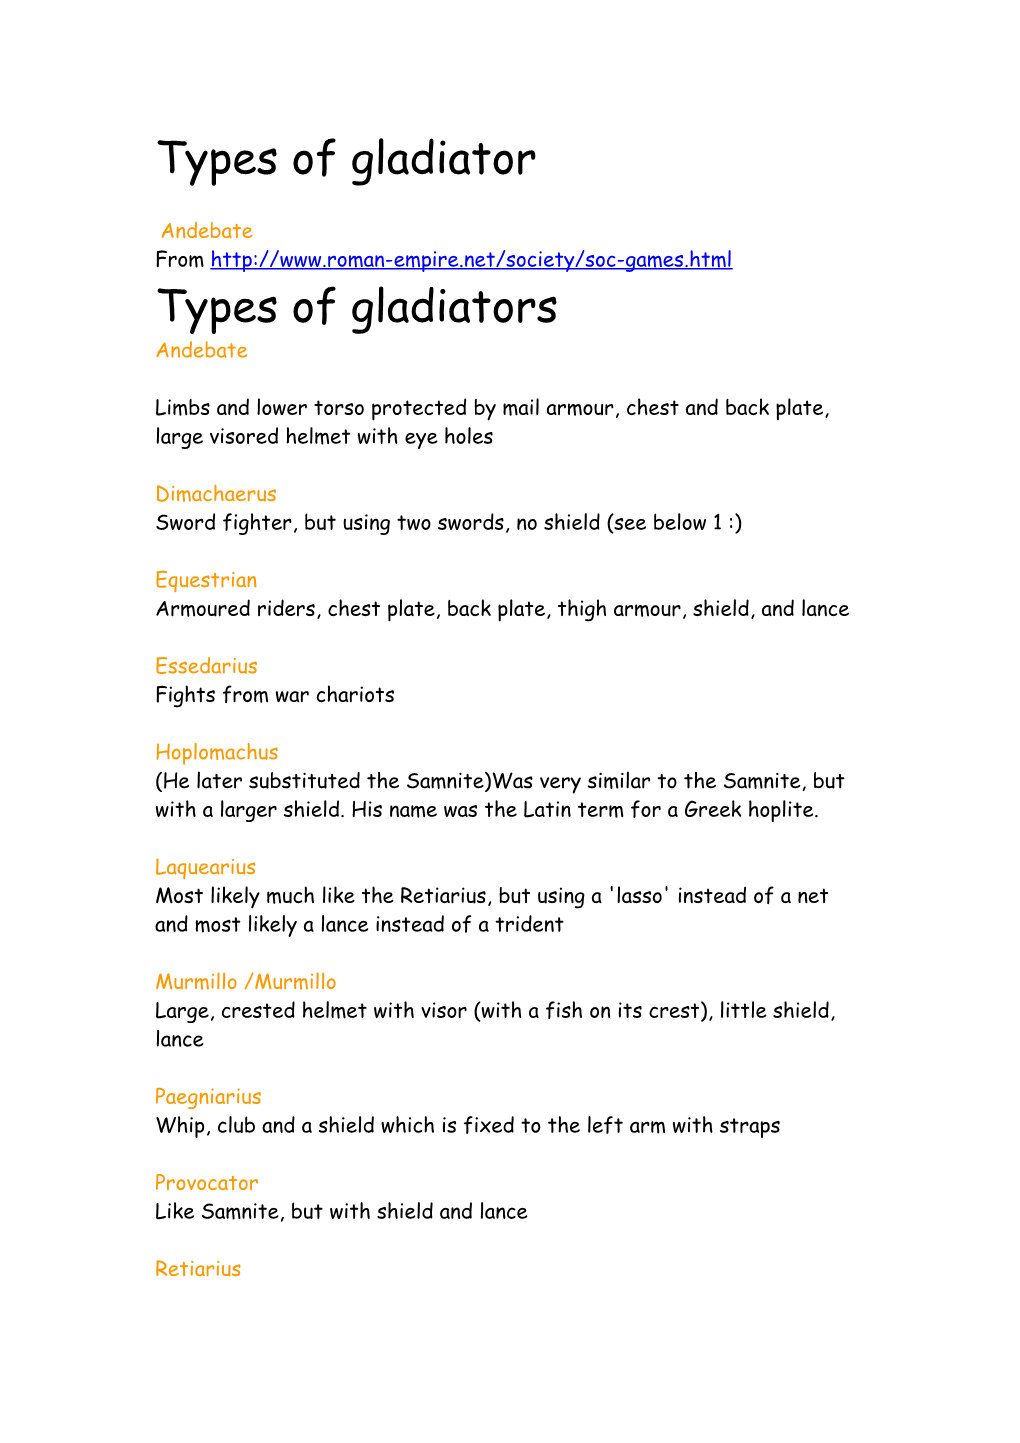 Types of Gladiator